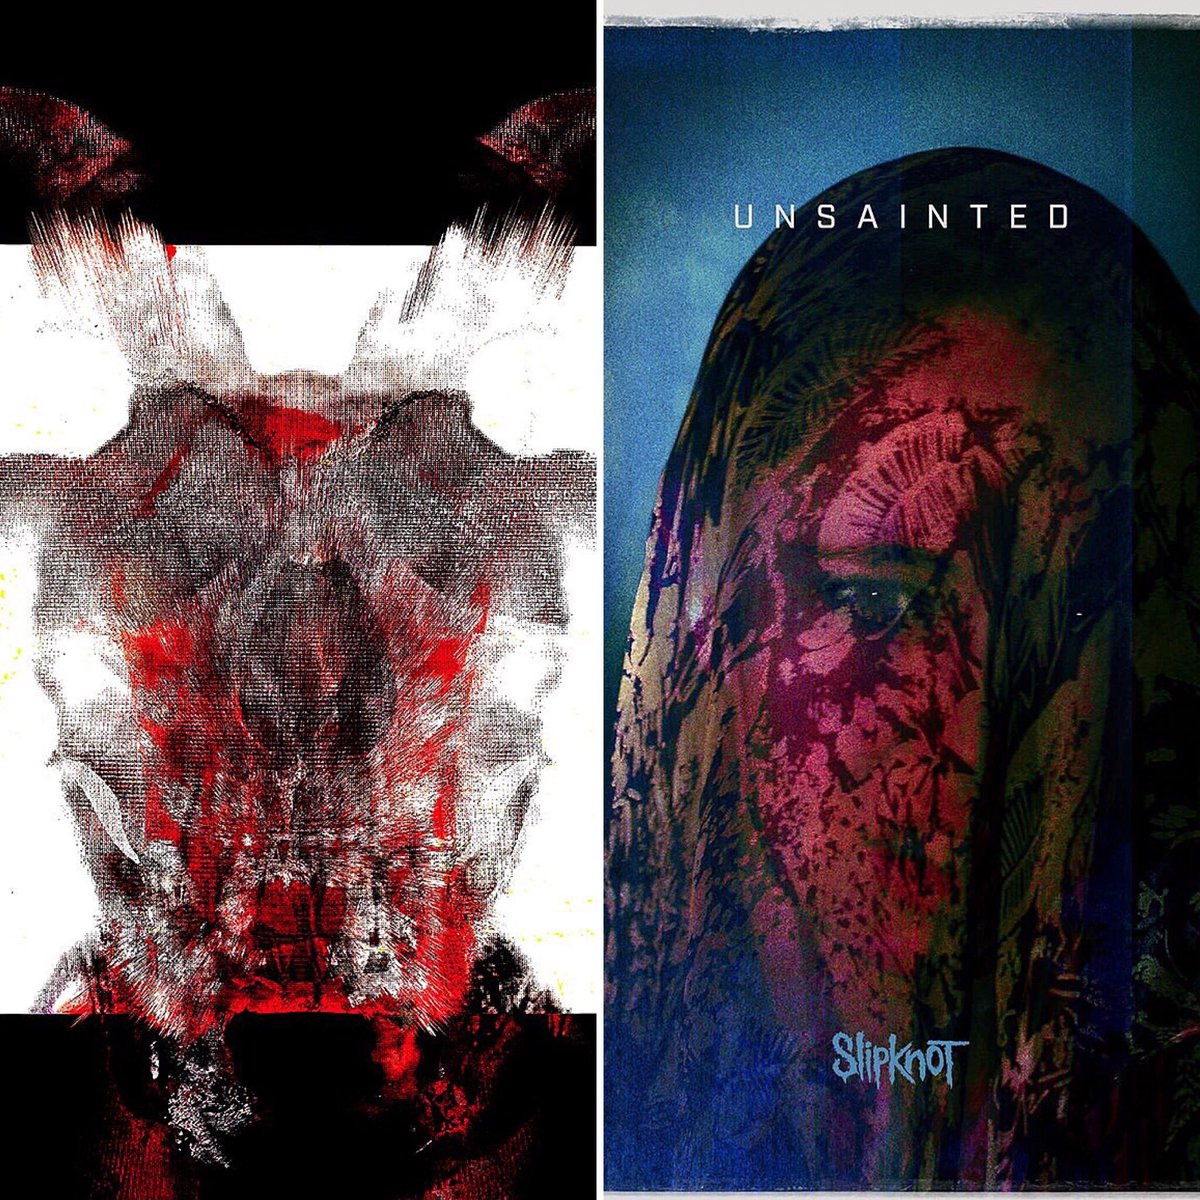 All Out Life Or Unsainted?
#metal #heavymetal #alternativemetal #numetal #groovemetal #slipknot #alloutlife #unsainted #slipknotsong